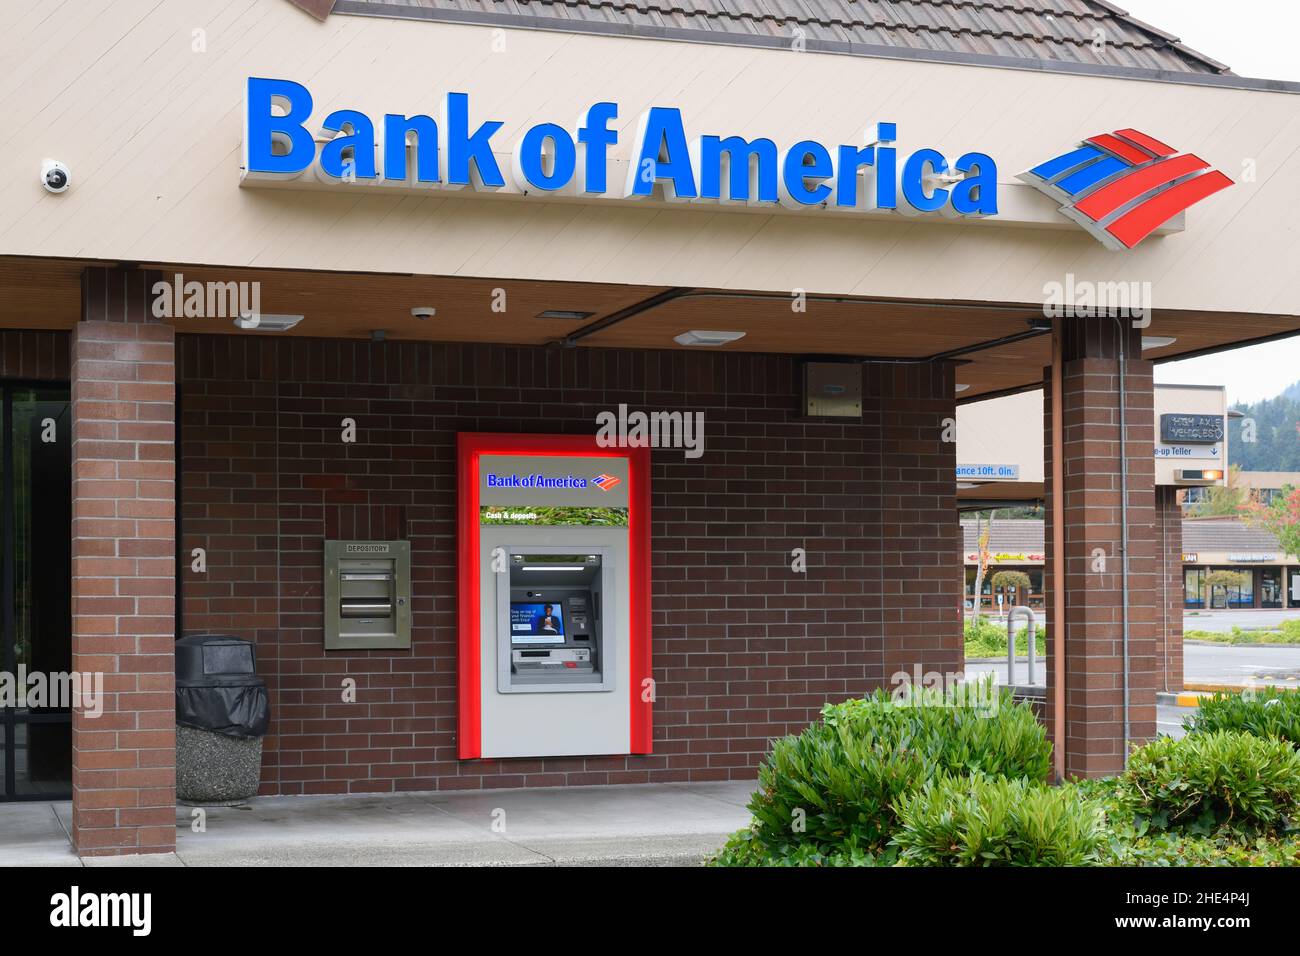 Banks Name in Usa  